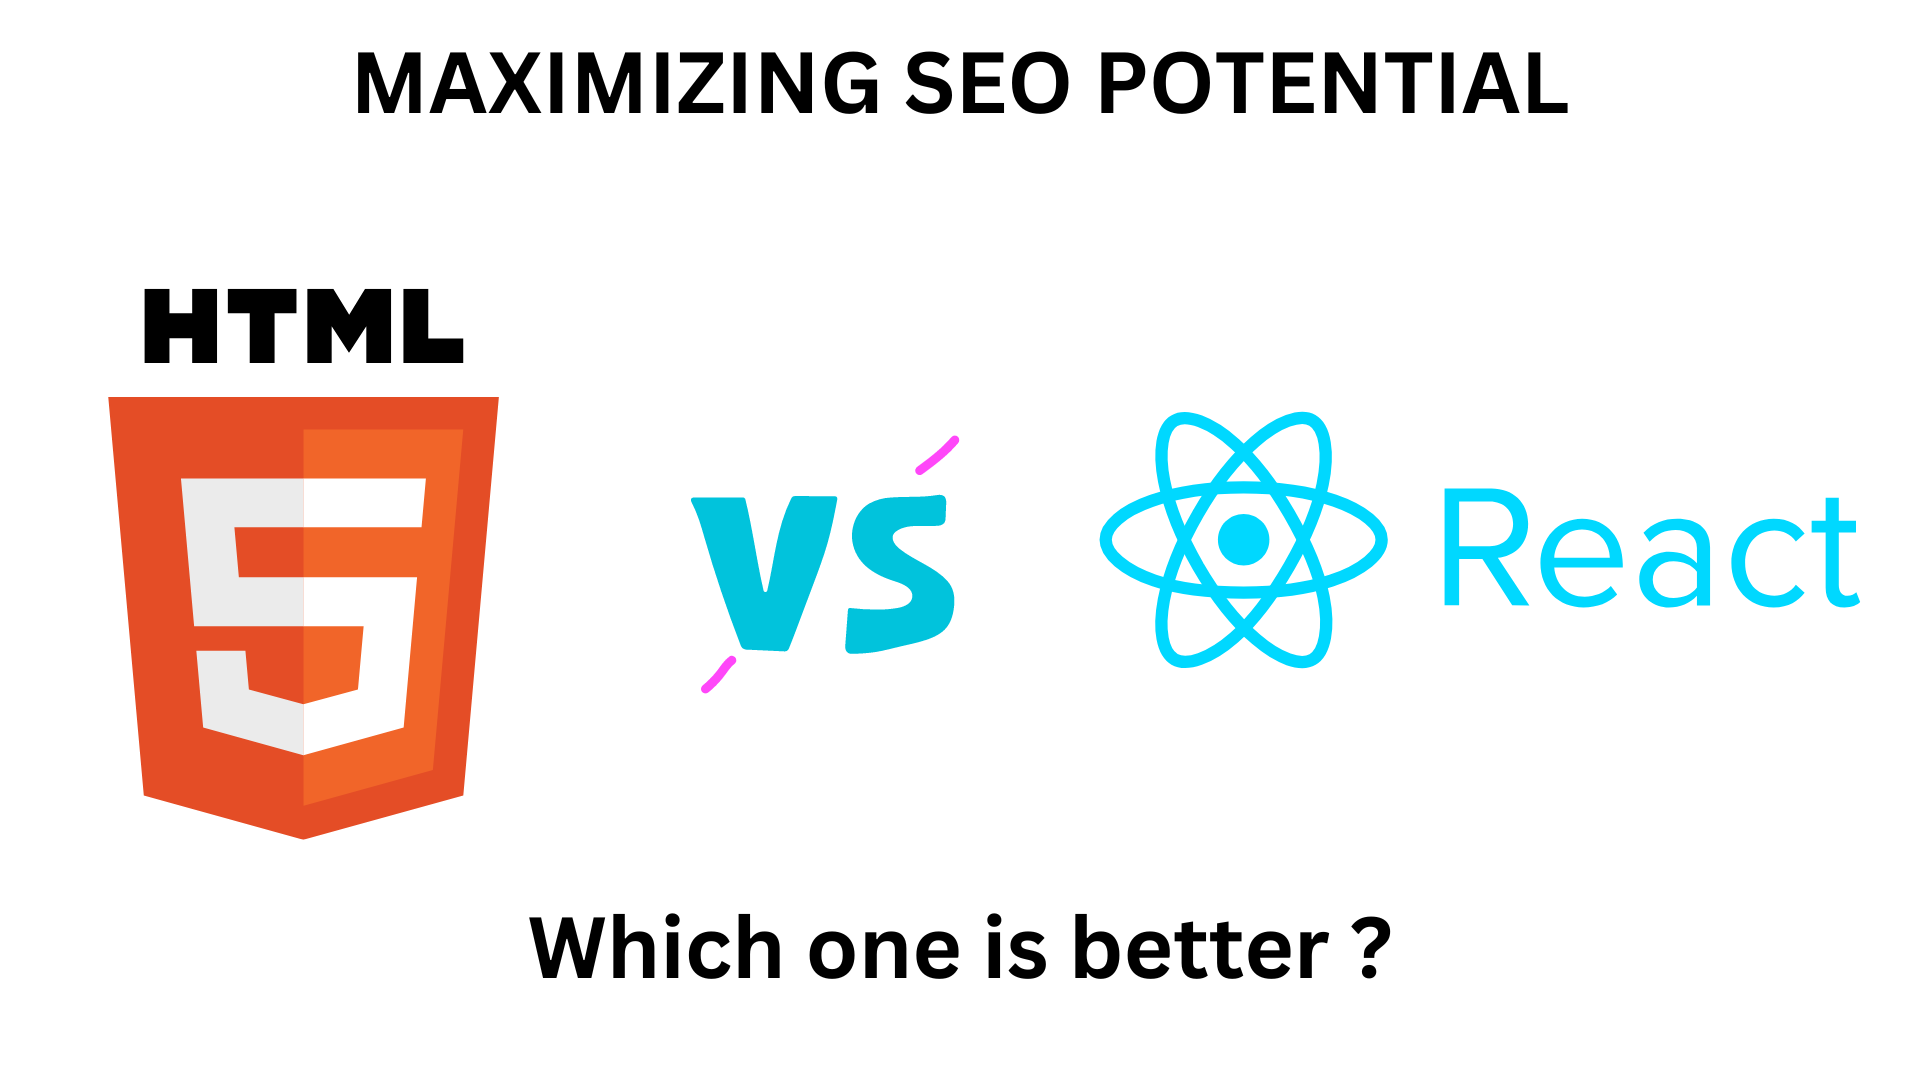 SEO Potential - HTML vs REACT